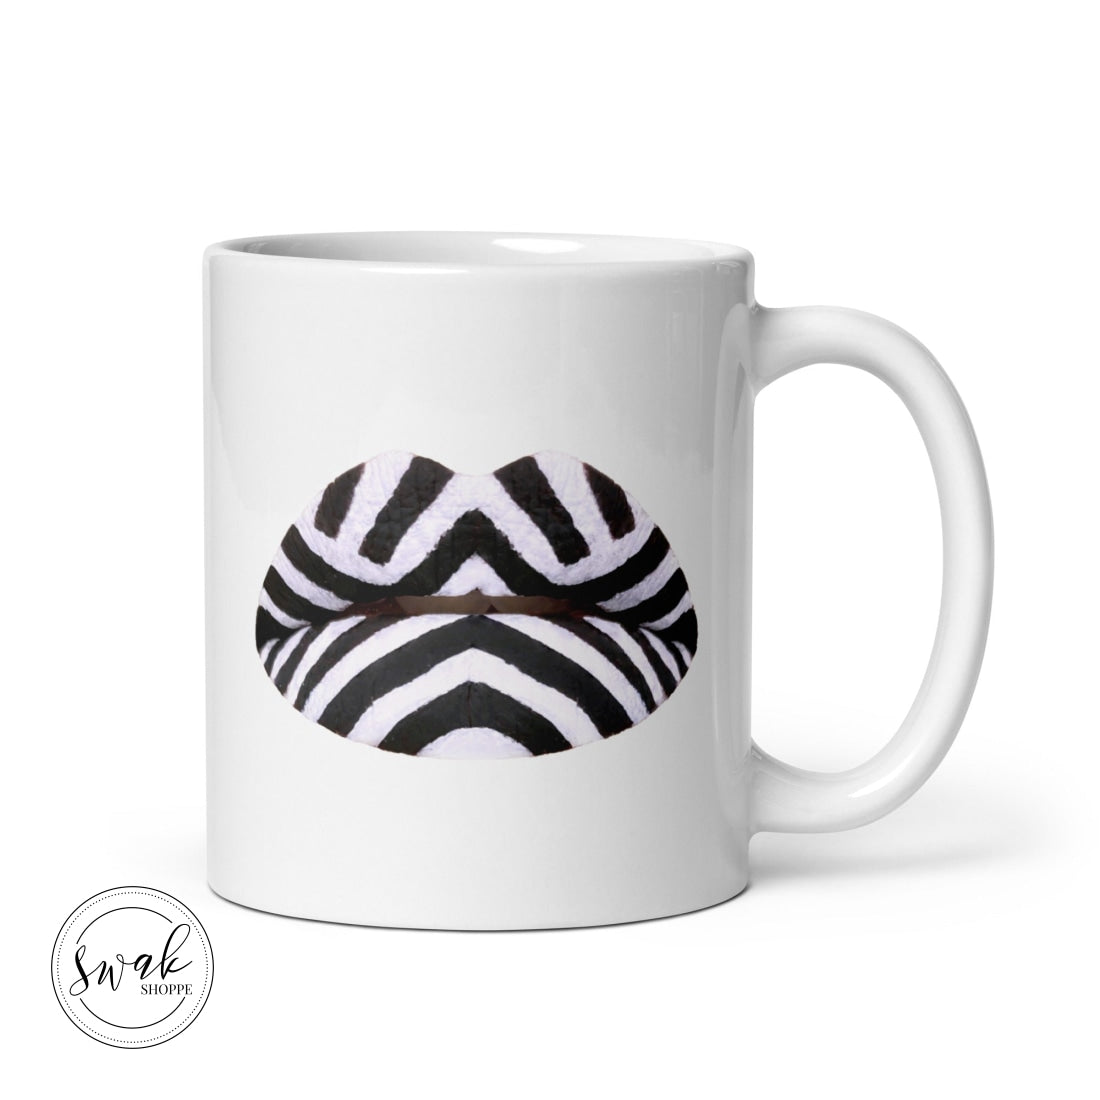 Personalized Mouth Lip Shape Ceramic Coffee Mug White Black